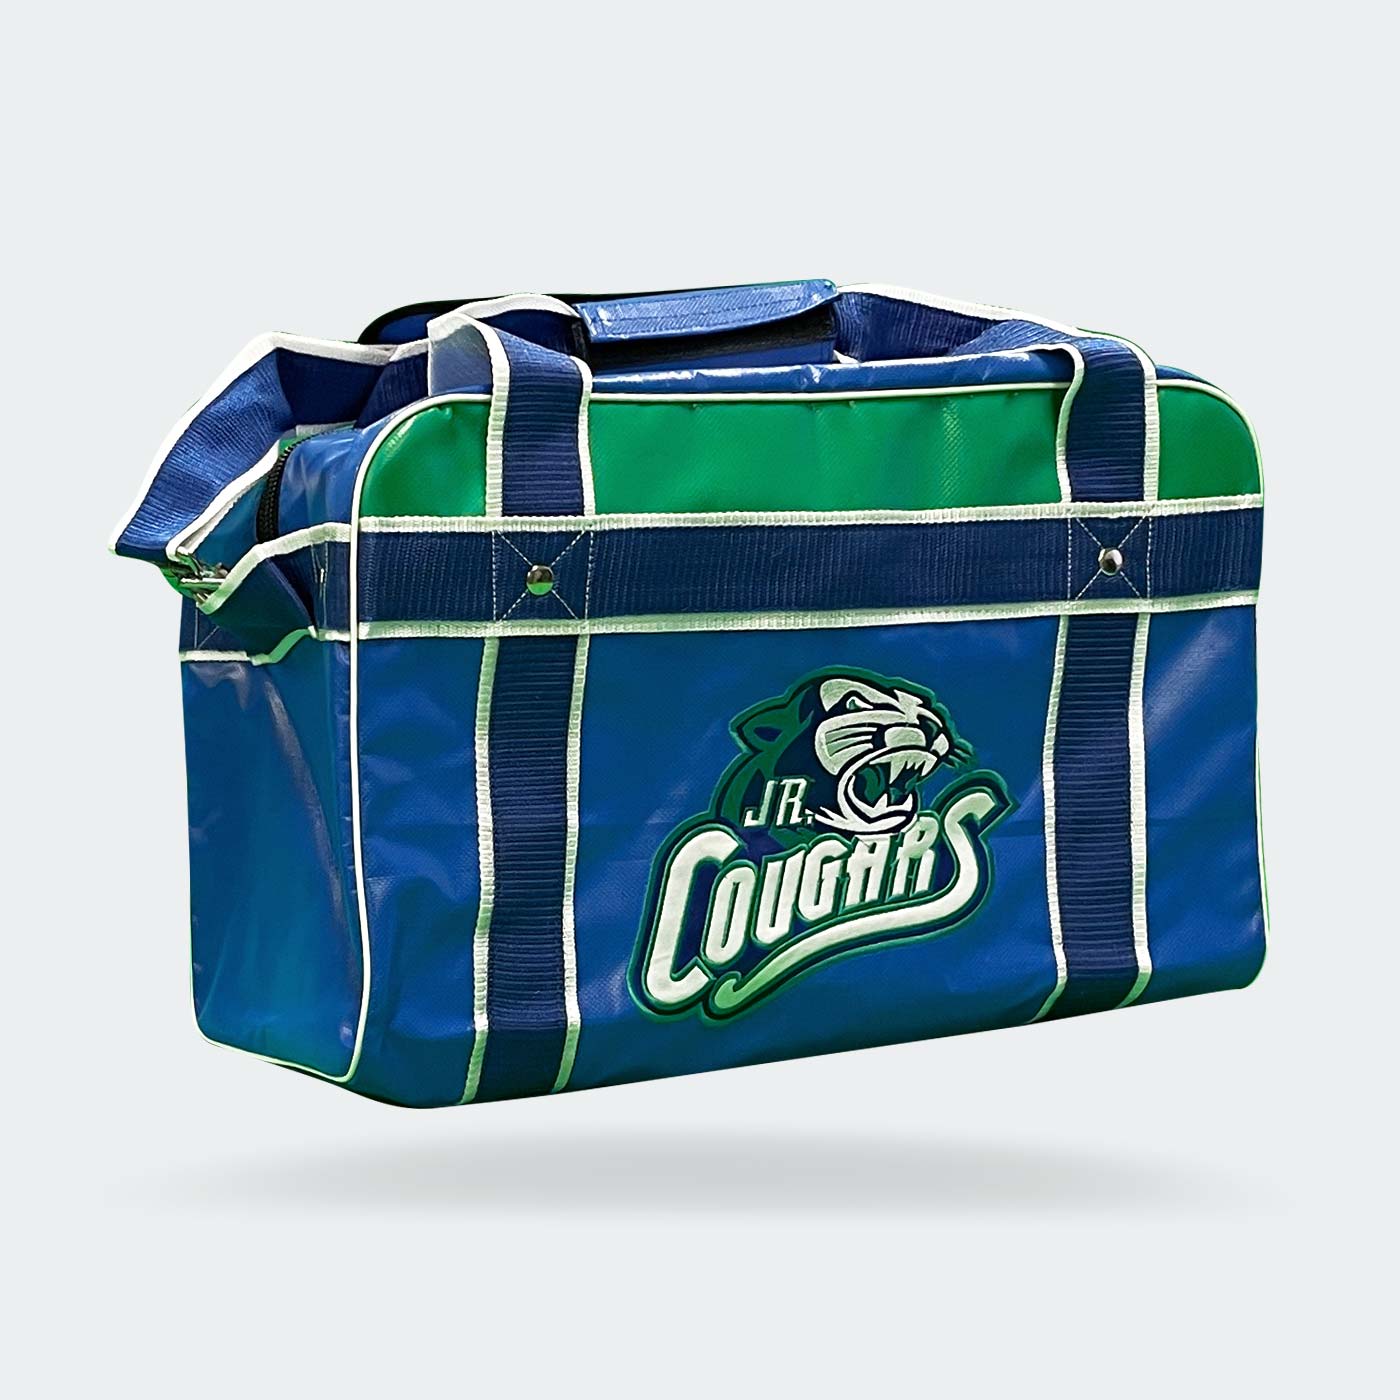 Jr. Cougars Custom Travel/Gym Bag